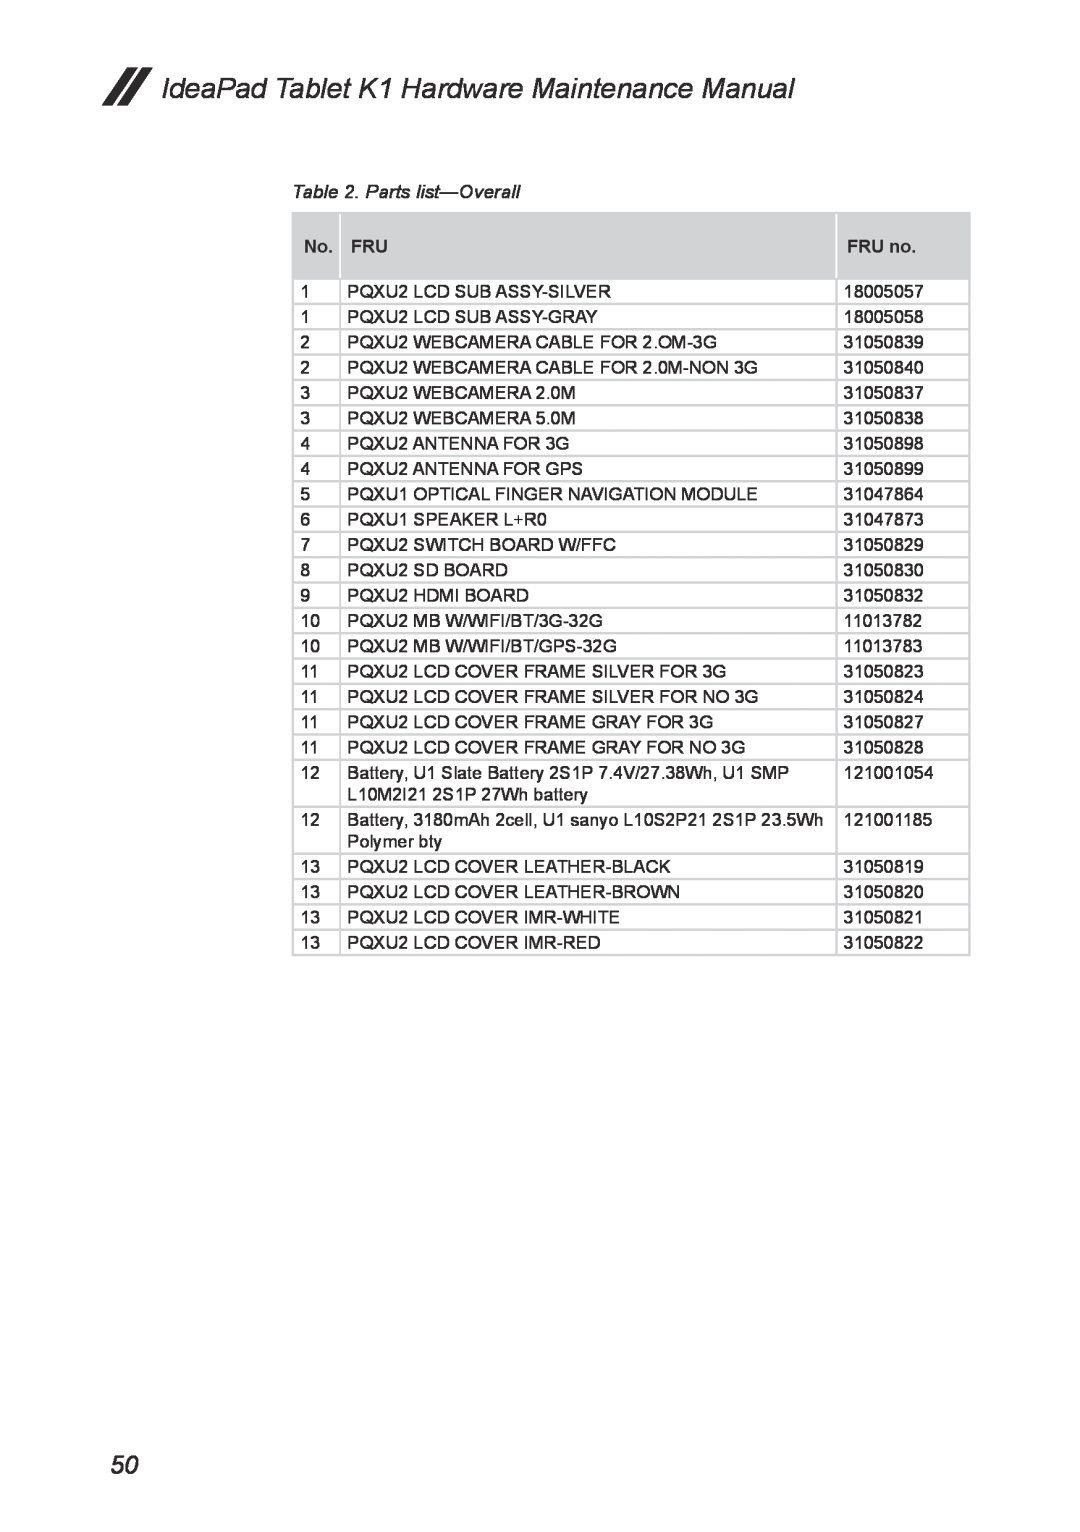 Lenovo T20x2-1, 1304XF8 manual Parts list-Overall, IdeaPad Tablet K1 Hardware Maintenance Manual, No. FRU, FRU no 